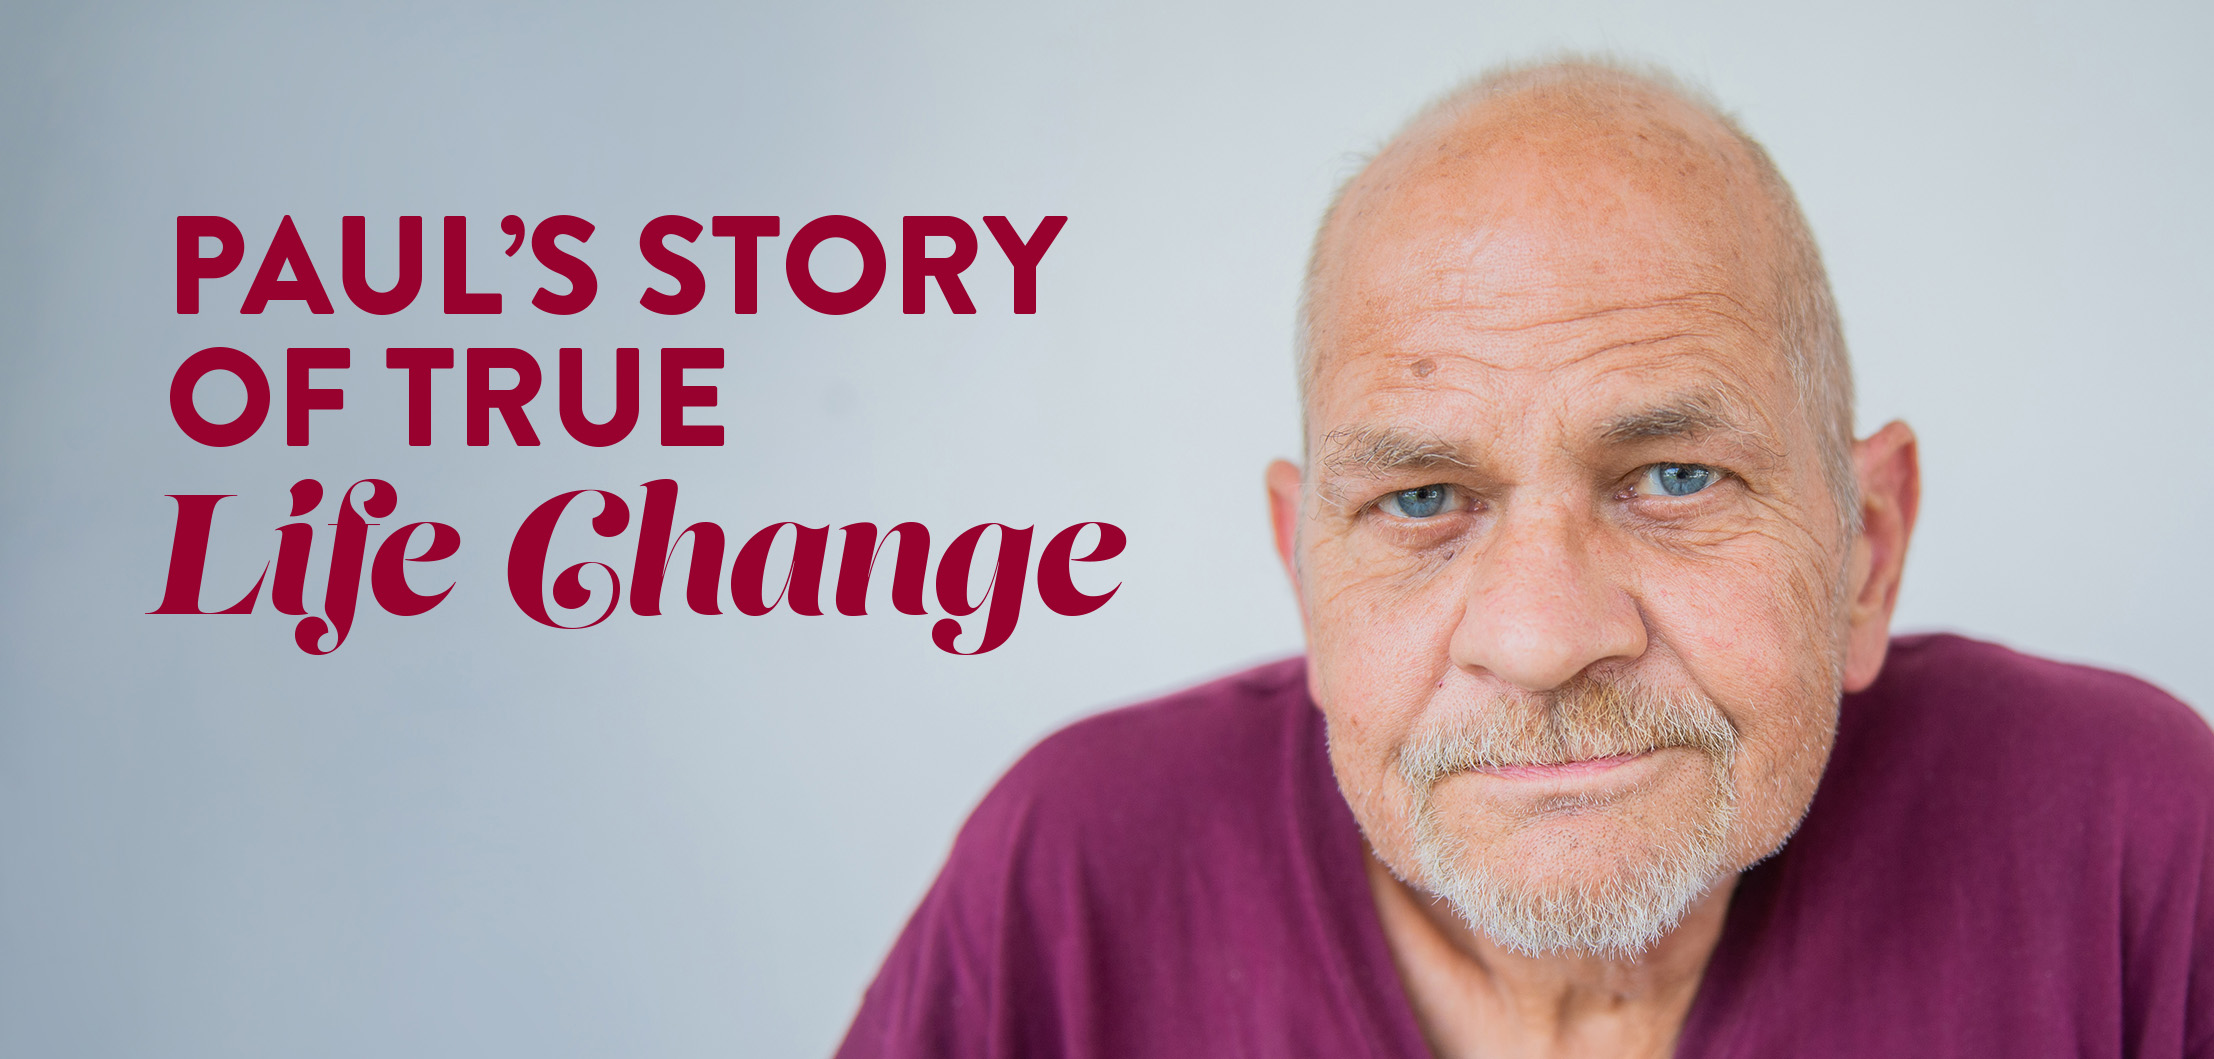 PAUL’S STORY OF TRUE LIFE CHANGE